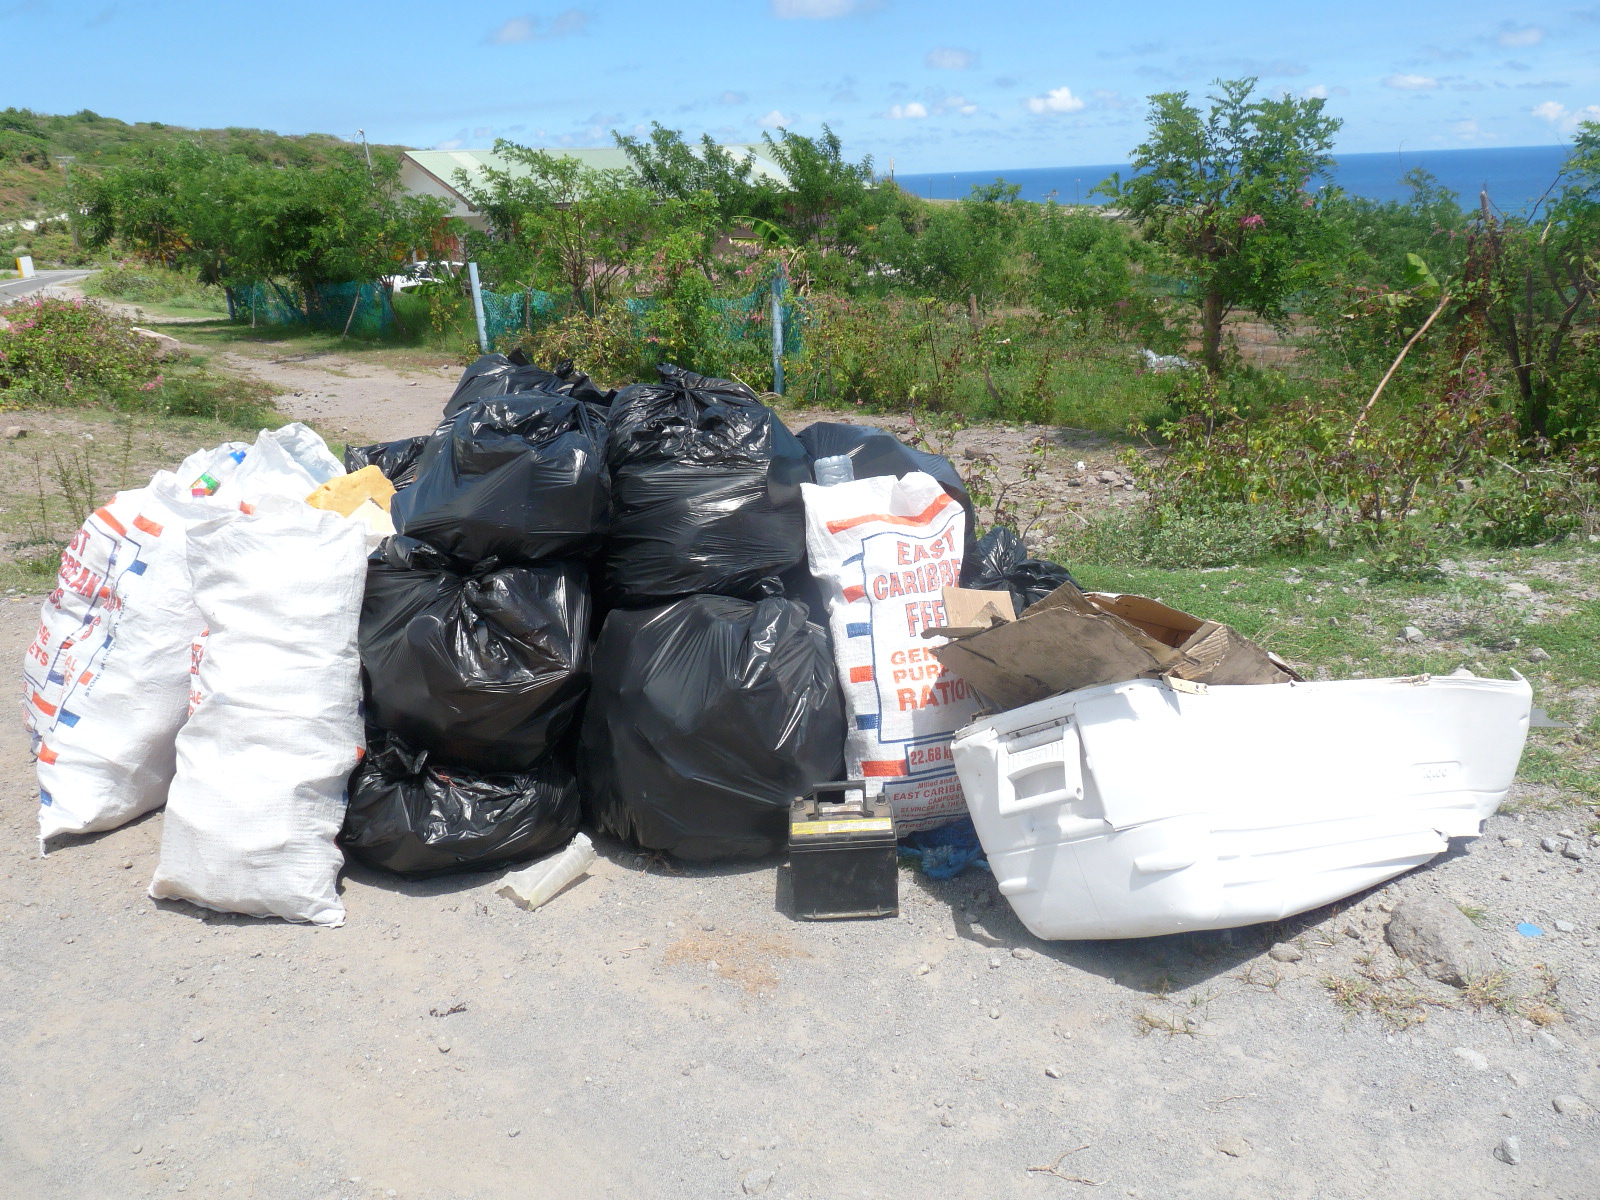 International Coastal Cleanup 2015 - Saint Kitts and Nevis